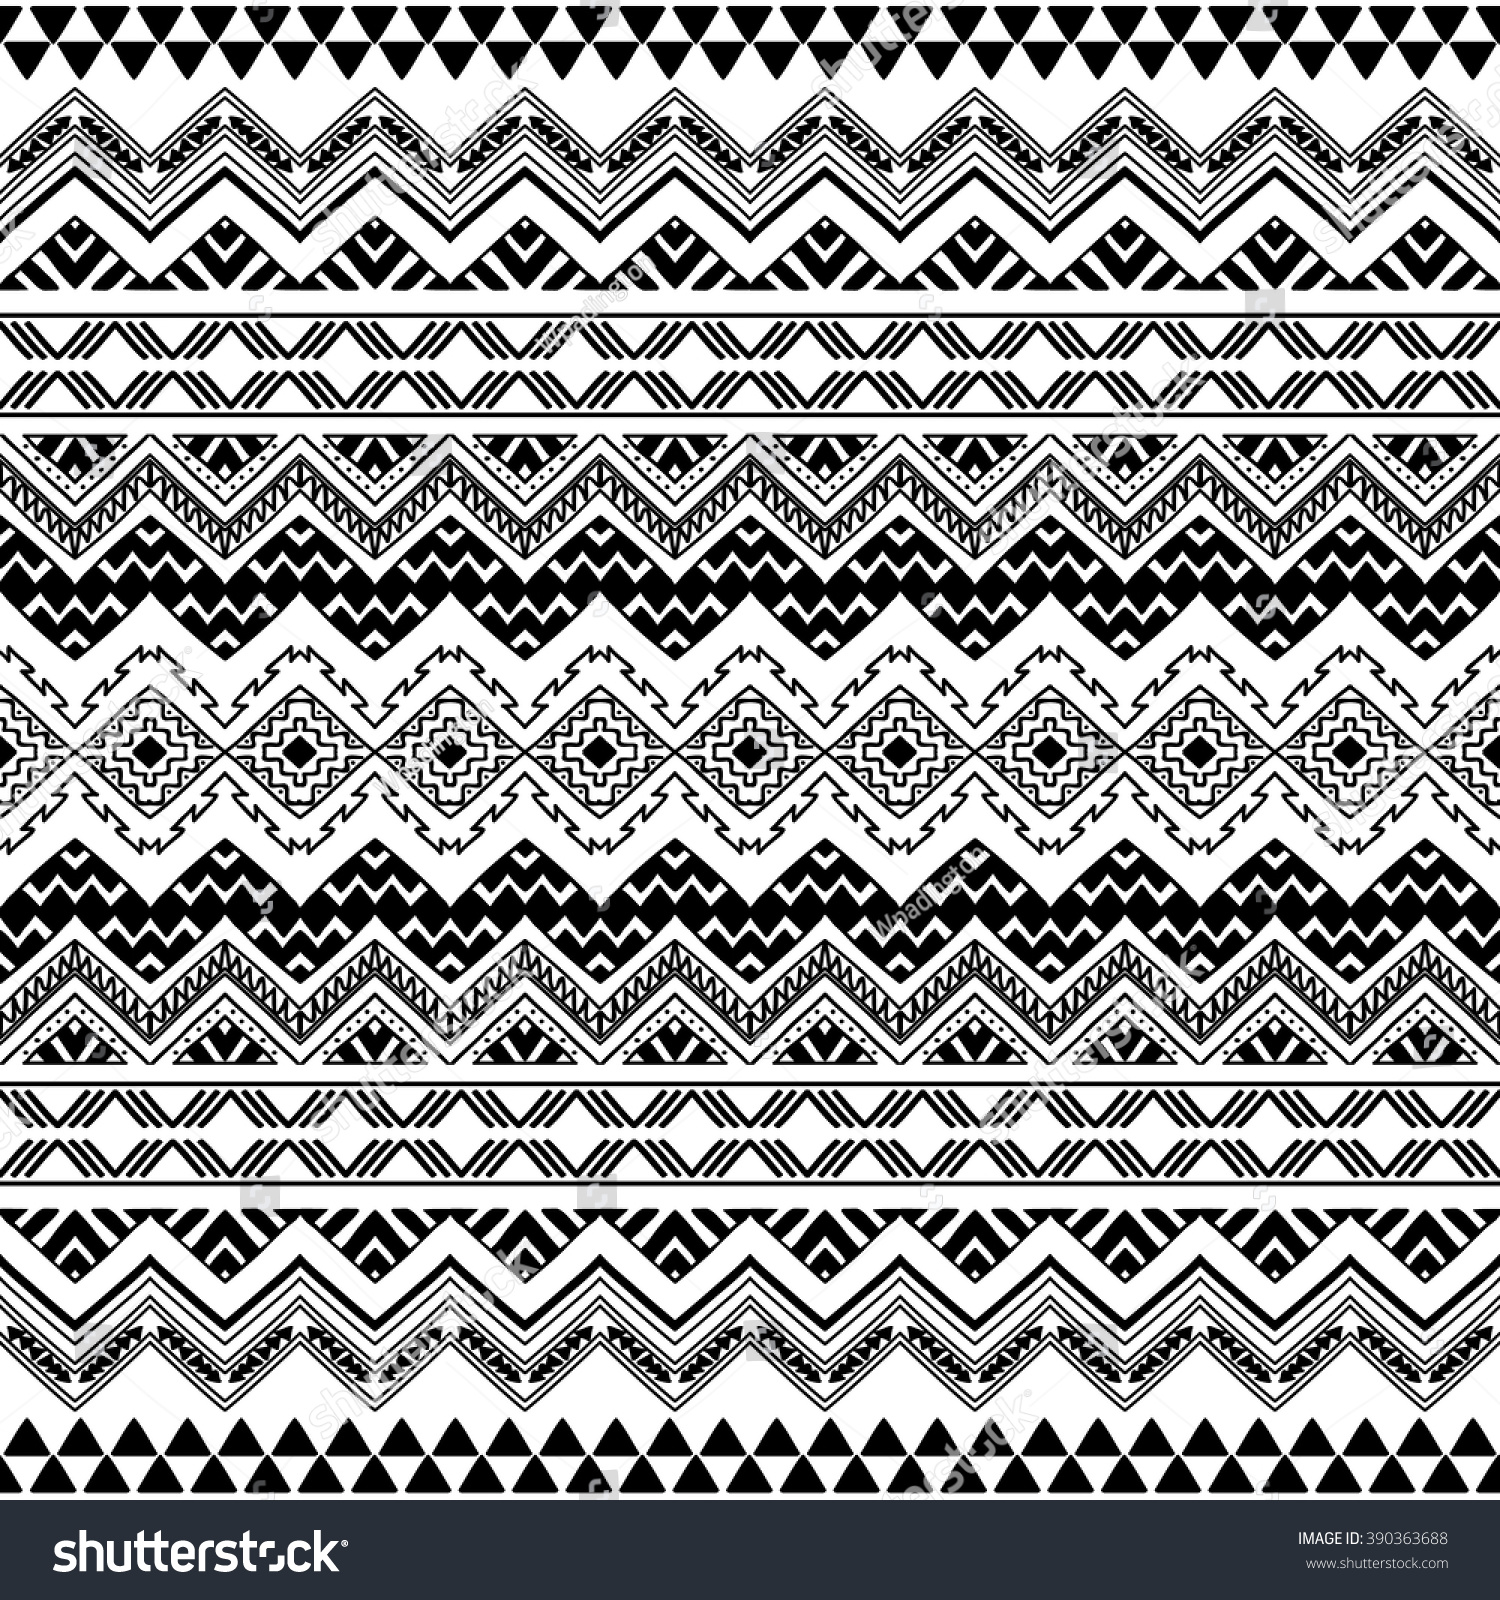 Seamless Boho Chic Pattern Tribal Aztec Stock Vector 390363688 ...